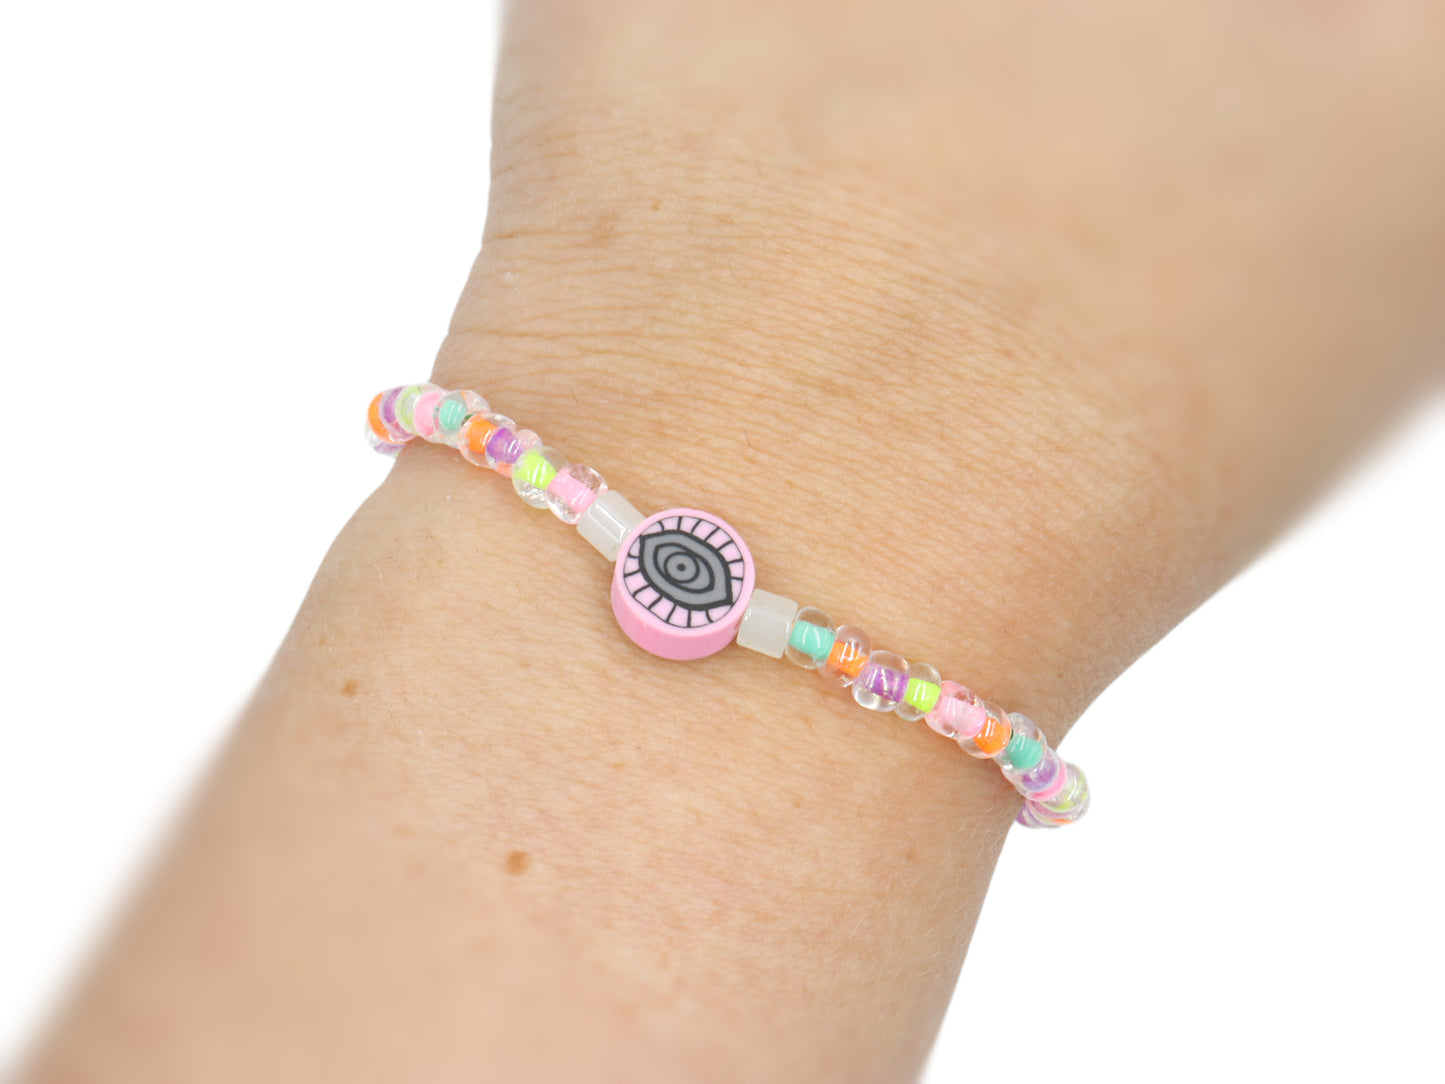 The Best Case of Pink Eye - Trippy Pastel Glass and Polymer Charm Bracelet by Monkeys Mojo